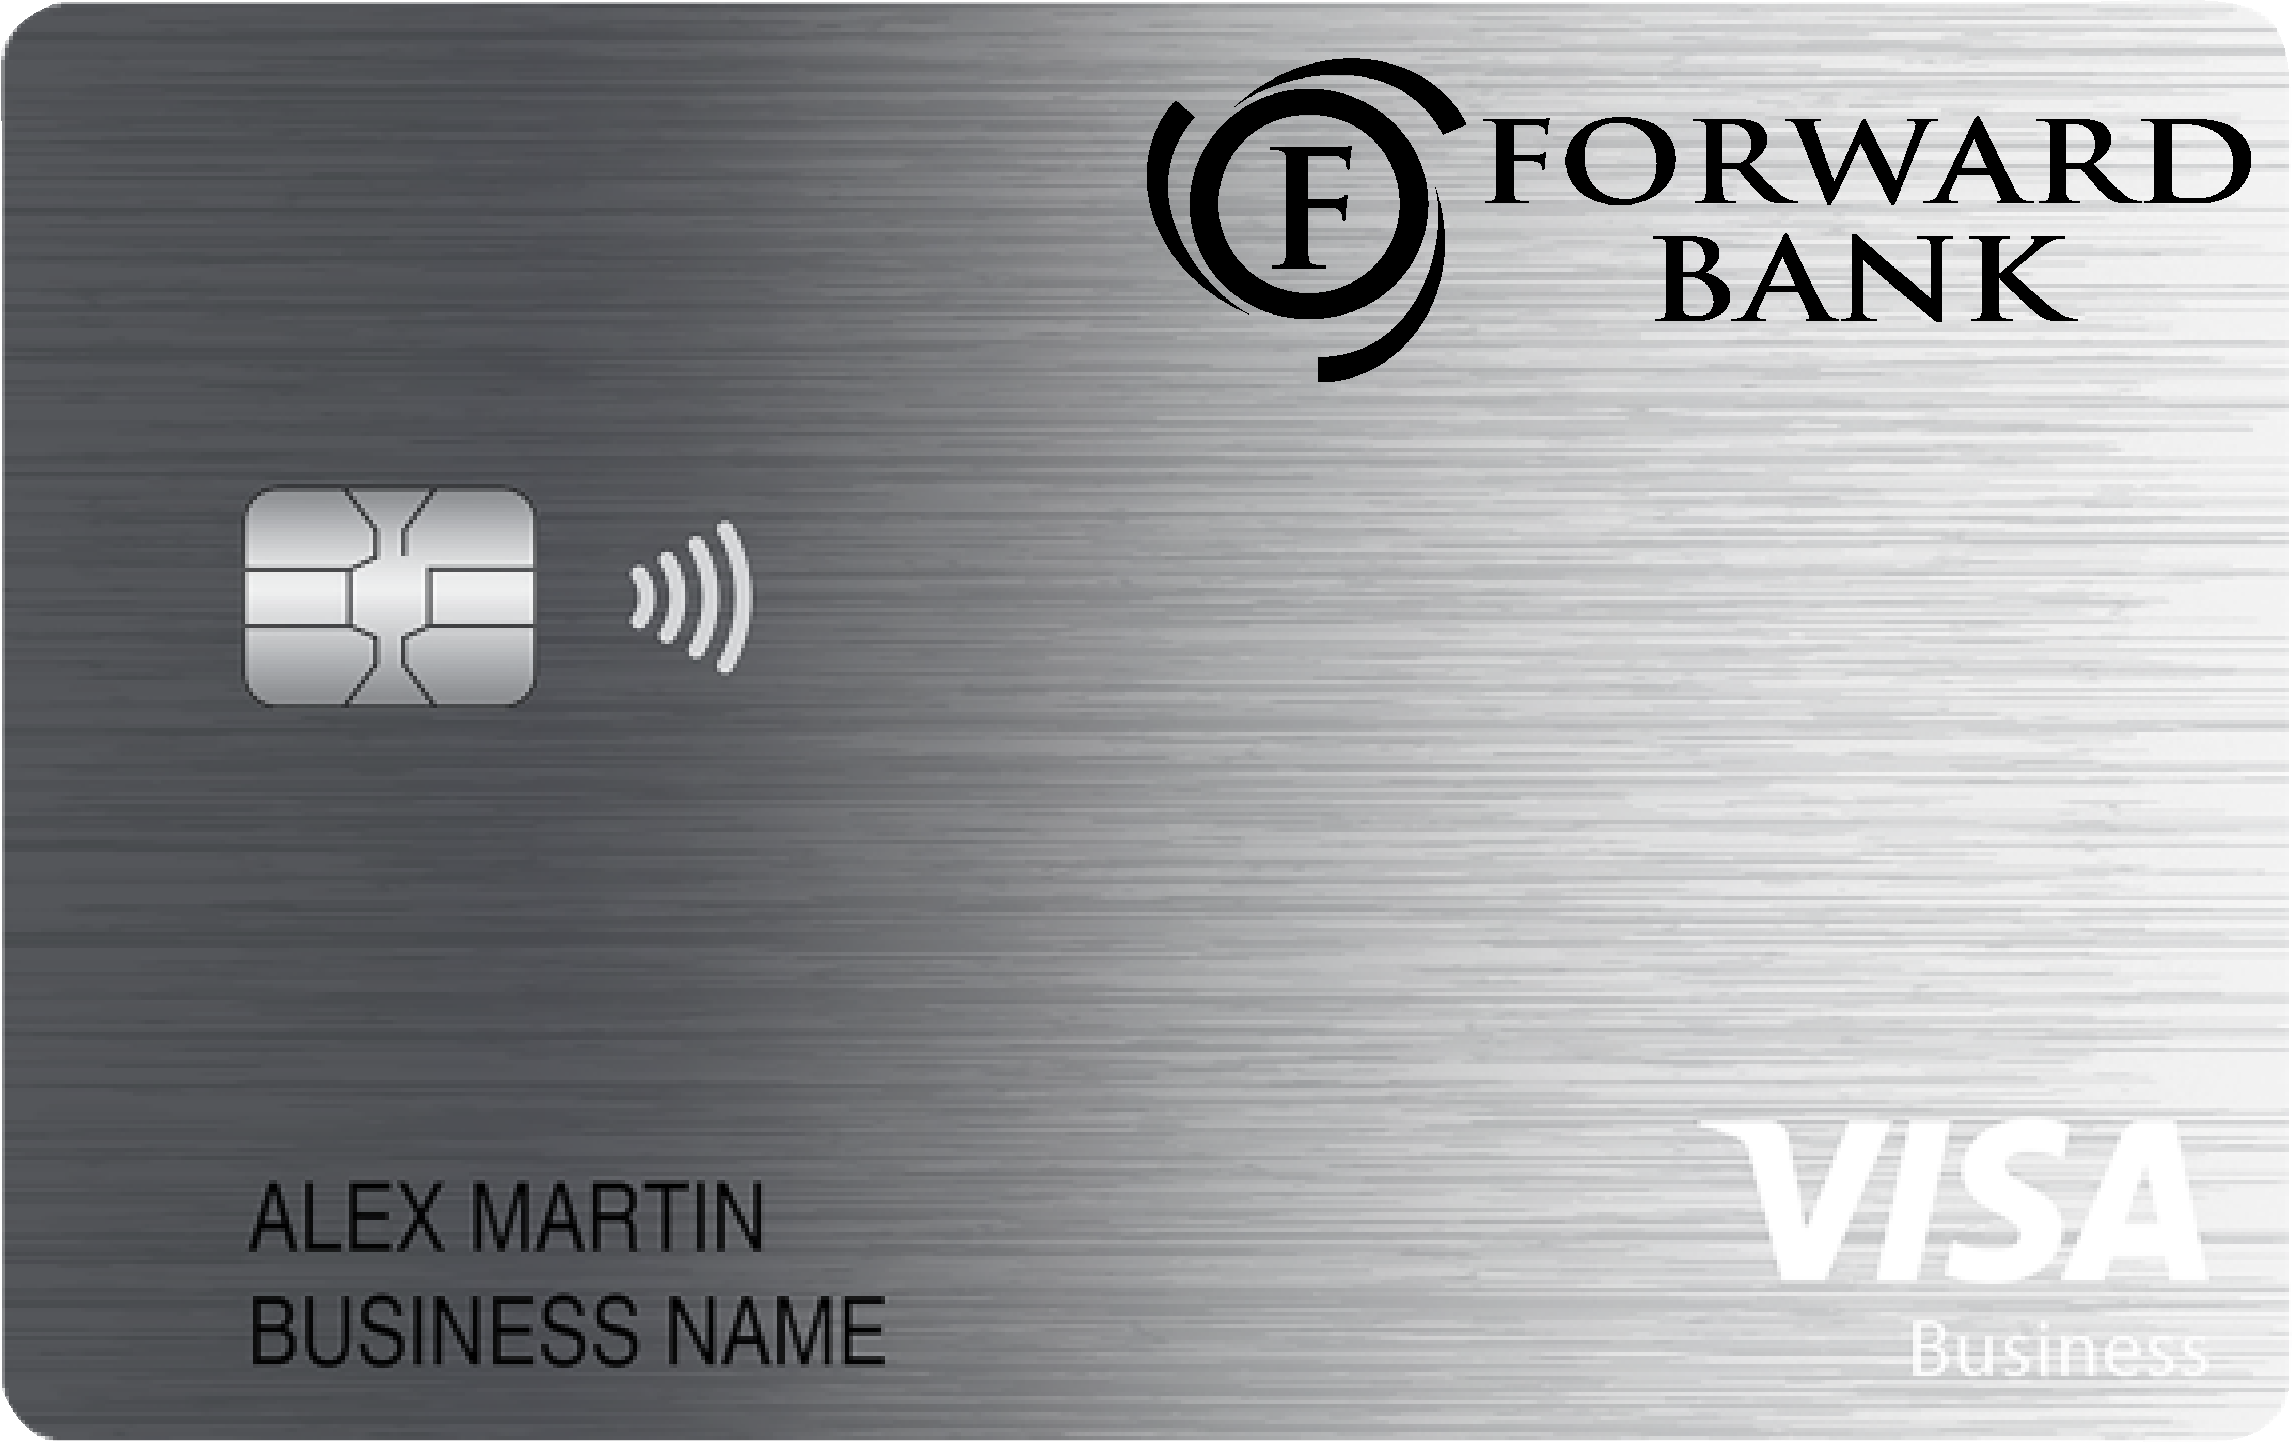 Forward Bank Business Cash Preferred Card